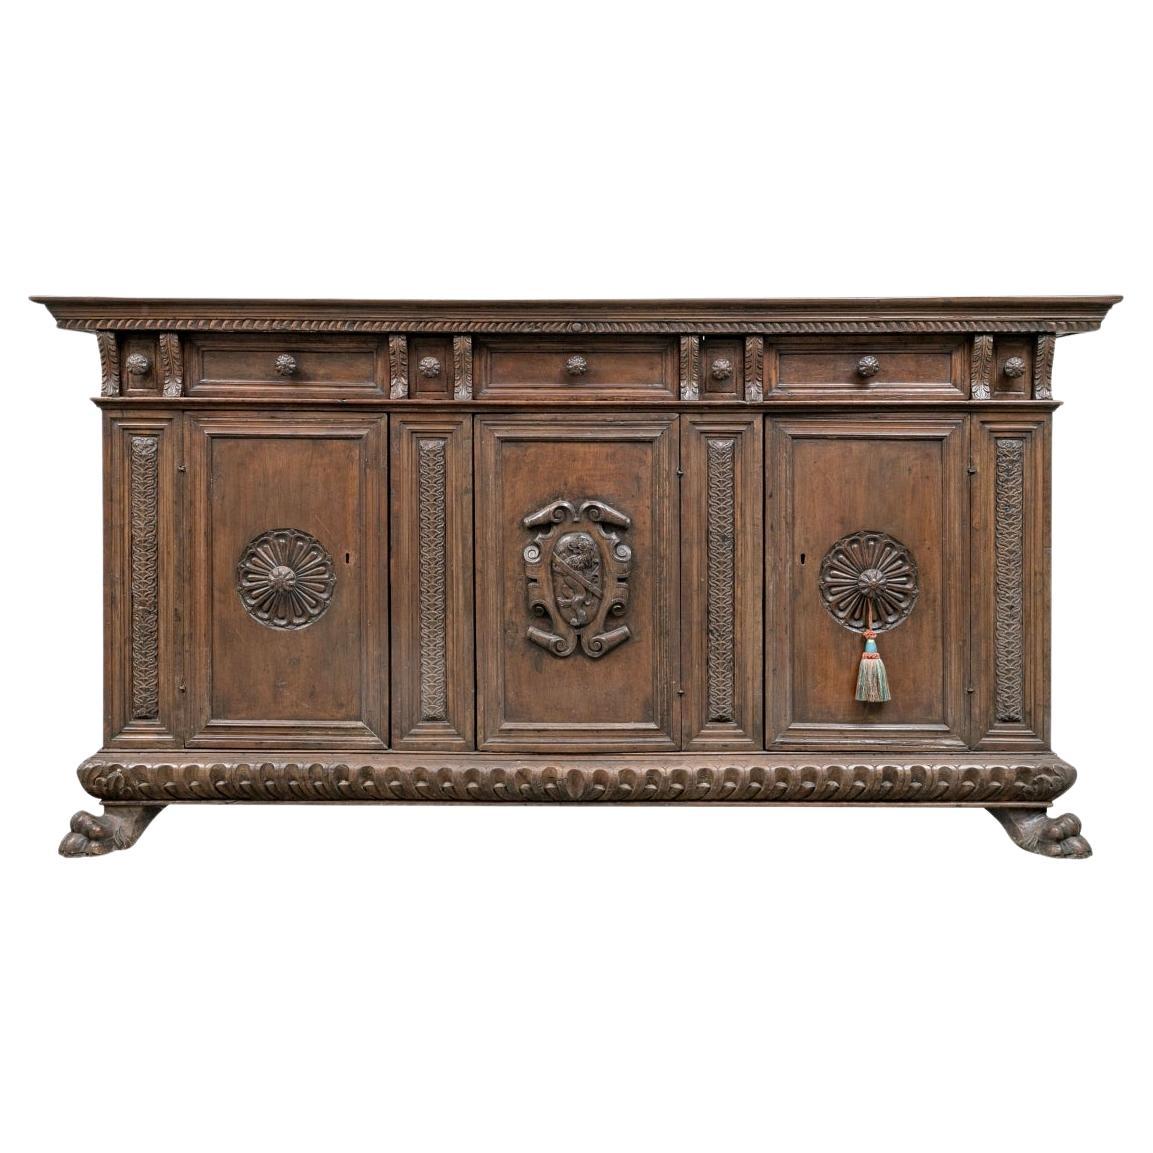 Exceptional Large Antique Italian Renaissance Cabinet With Heraldic Crest 